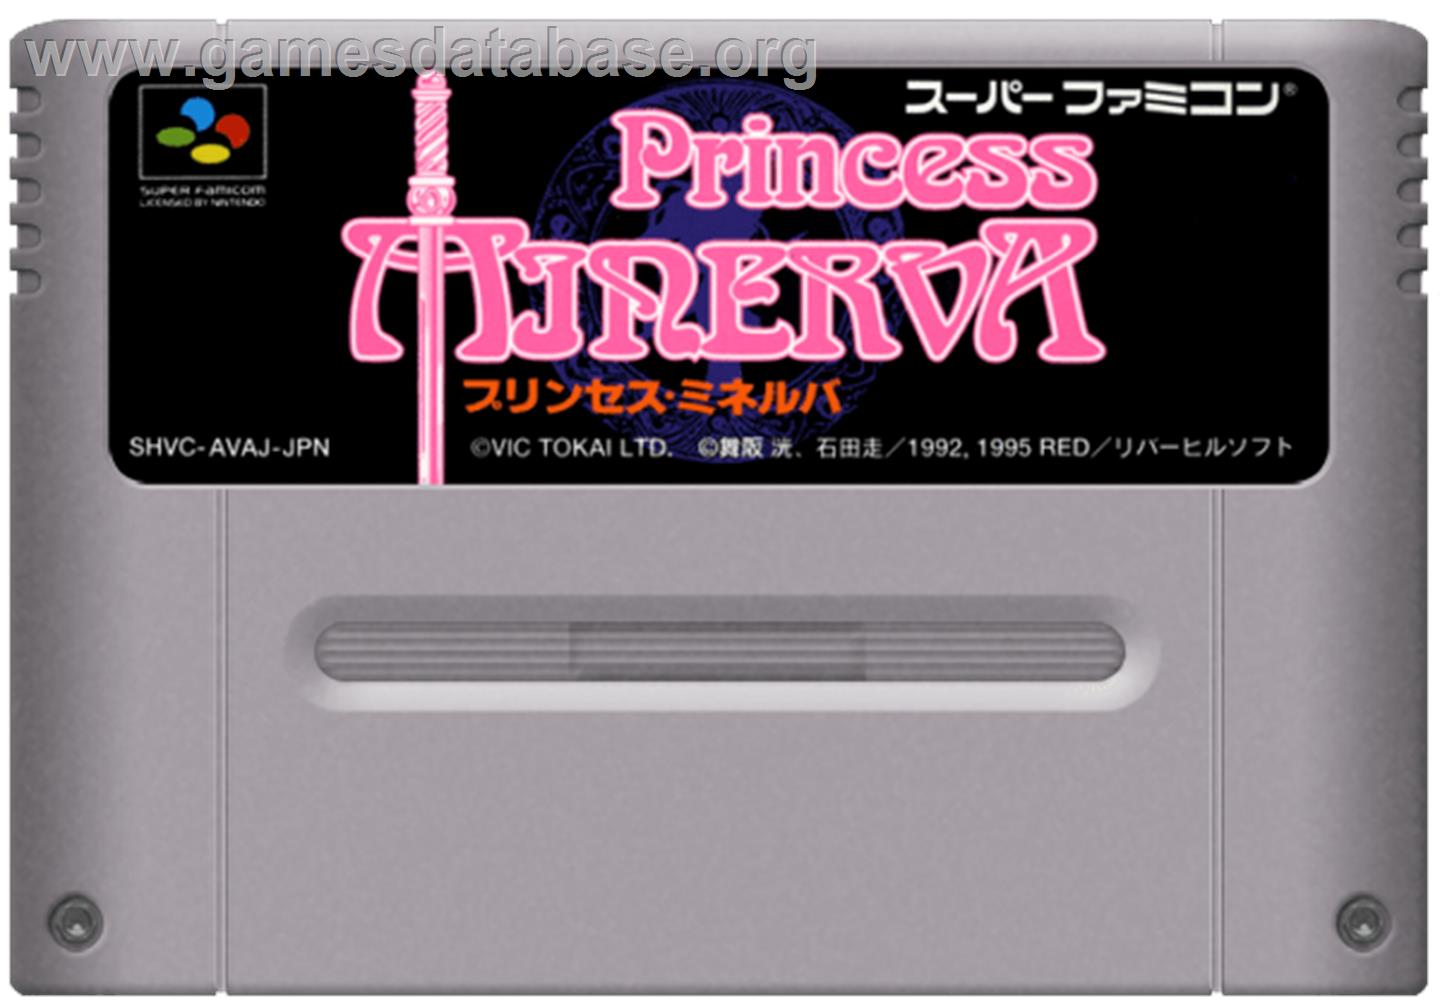 Princess Minerva - Nintendo SNES - Artwork - Cartridge